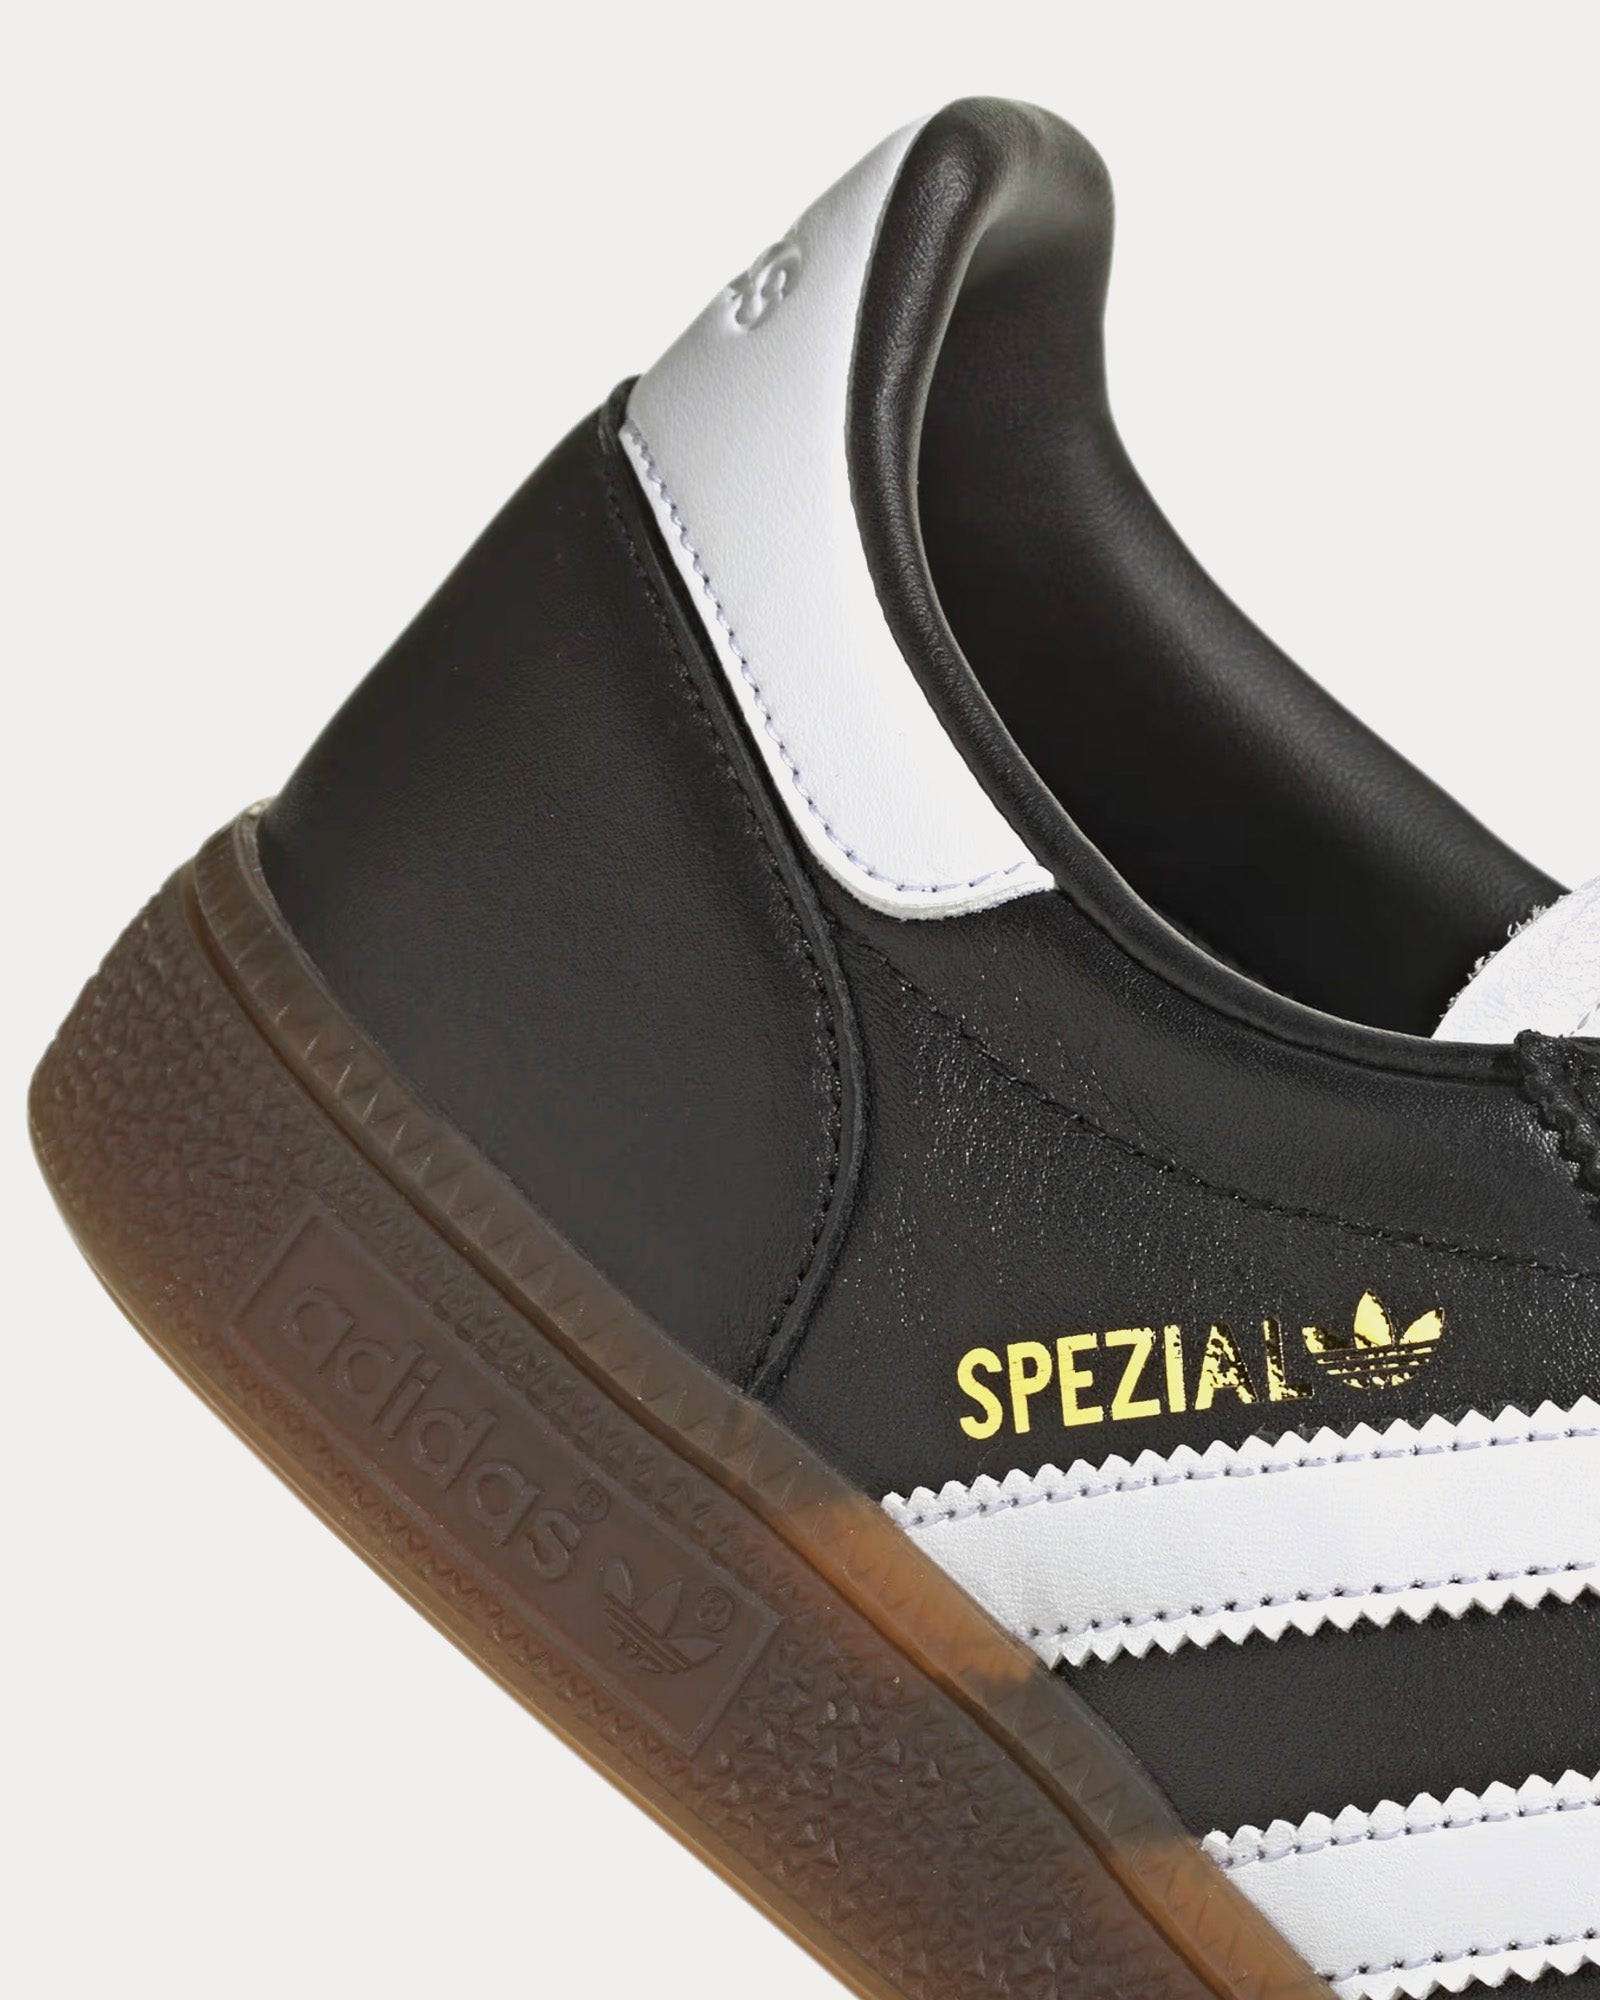 Adidas - Handball Spezial Core Black / Cloud White / Gum Low Top Sneakers